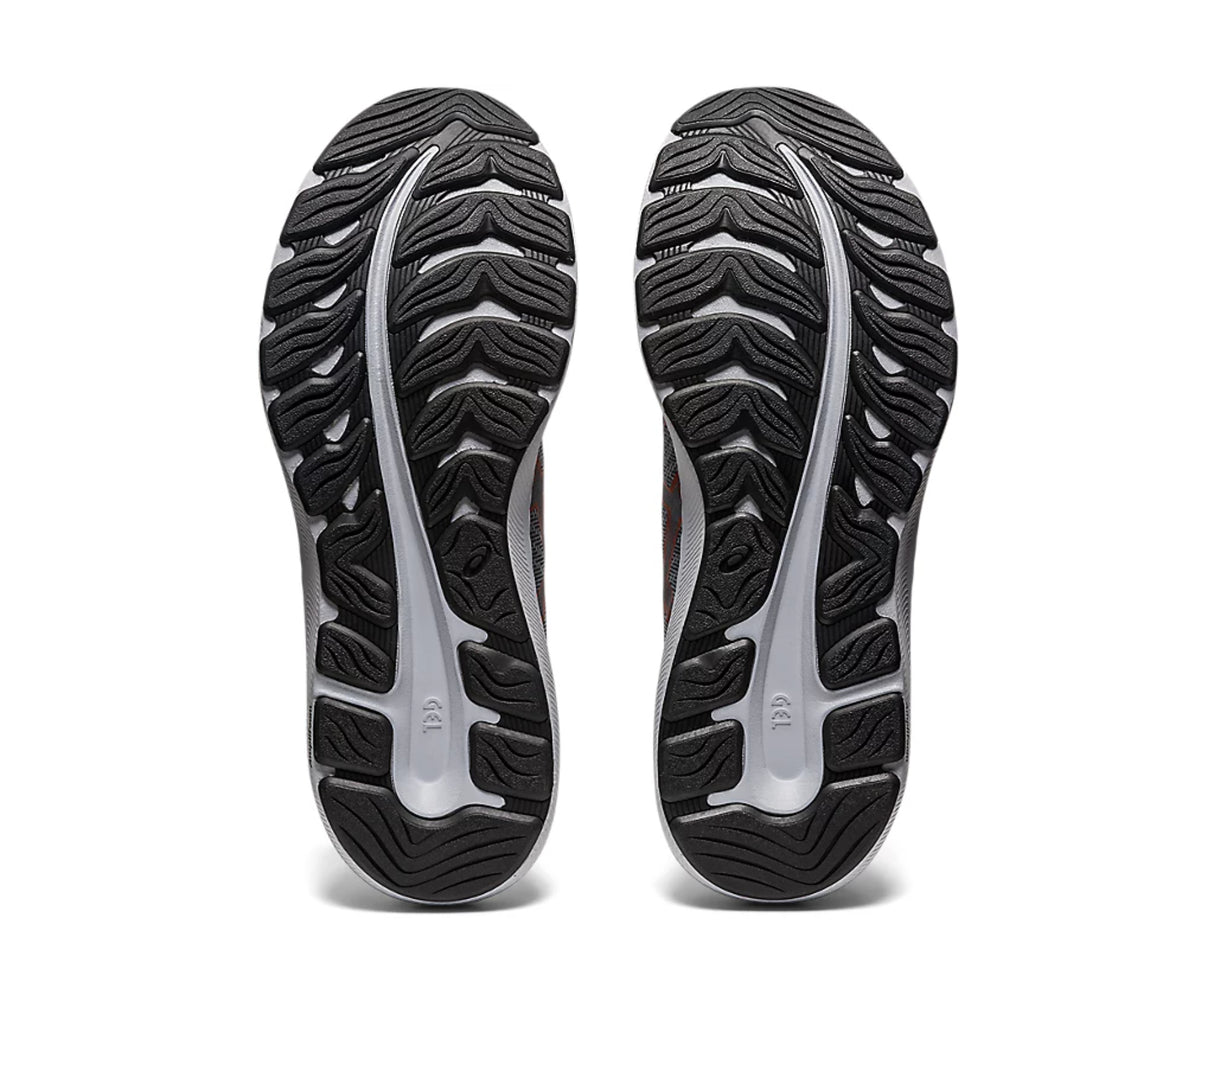 Asics GEL-EXCITE 9 Sports Running Shoes Sheet Rock/Spice Latte 1011B338